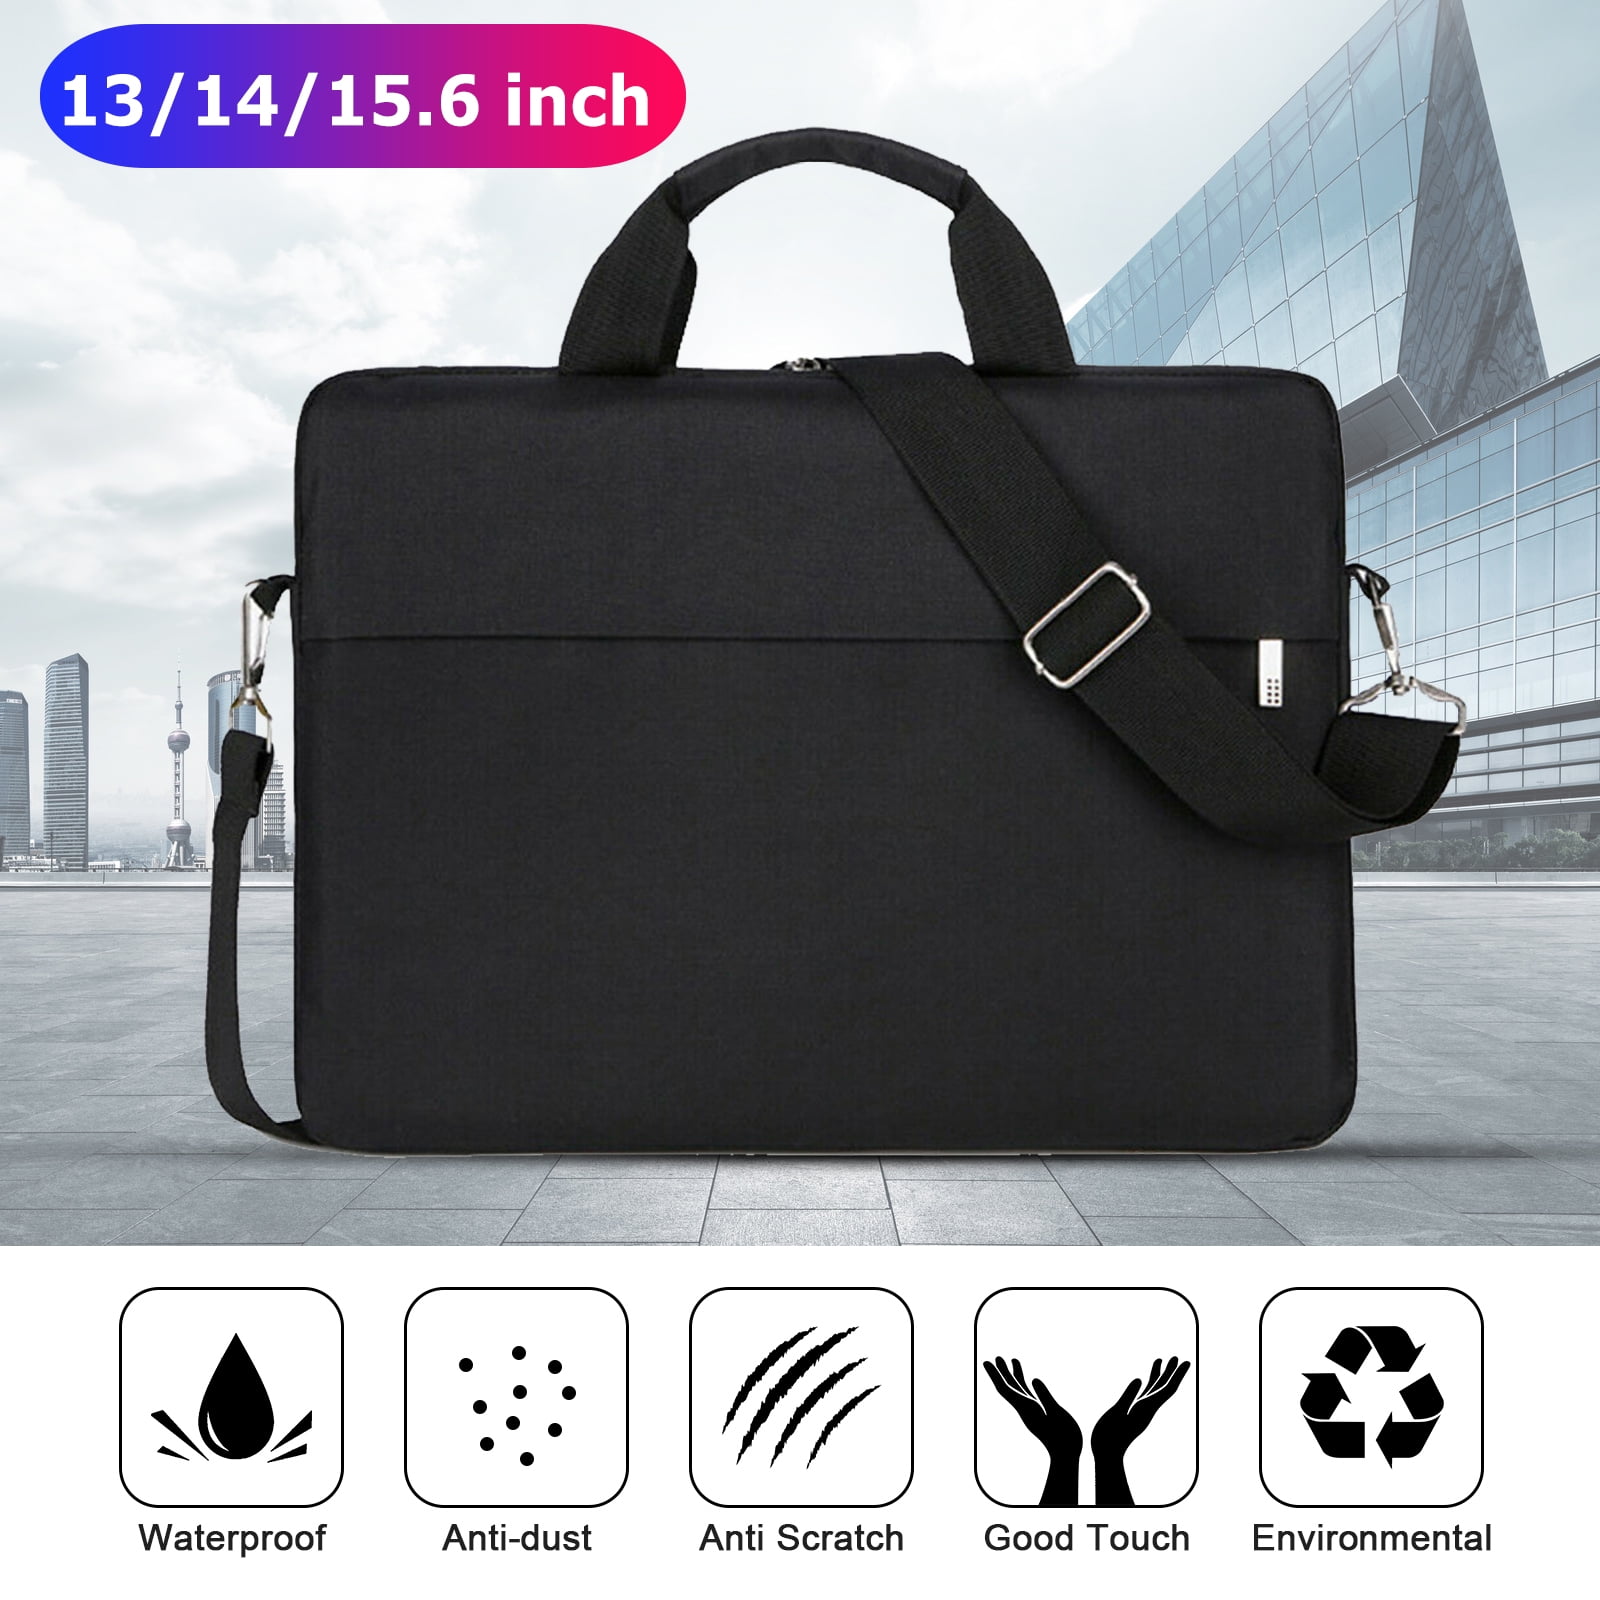 Laptop bag,Leather laptop bag,Briefcase satchel bags women,Messenger crossbody MacBook Air Pro Case 14,15,15.6,16 inch Personalized Gift